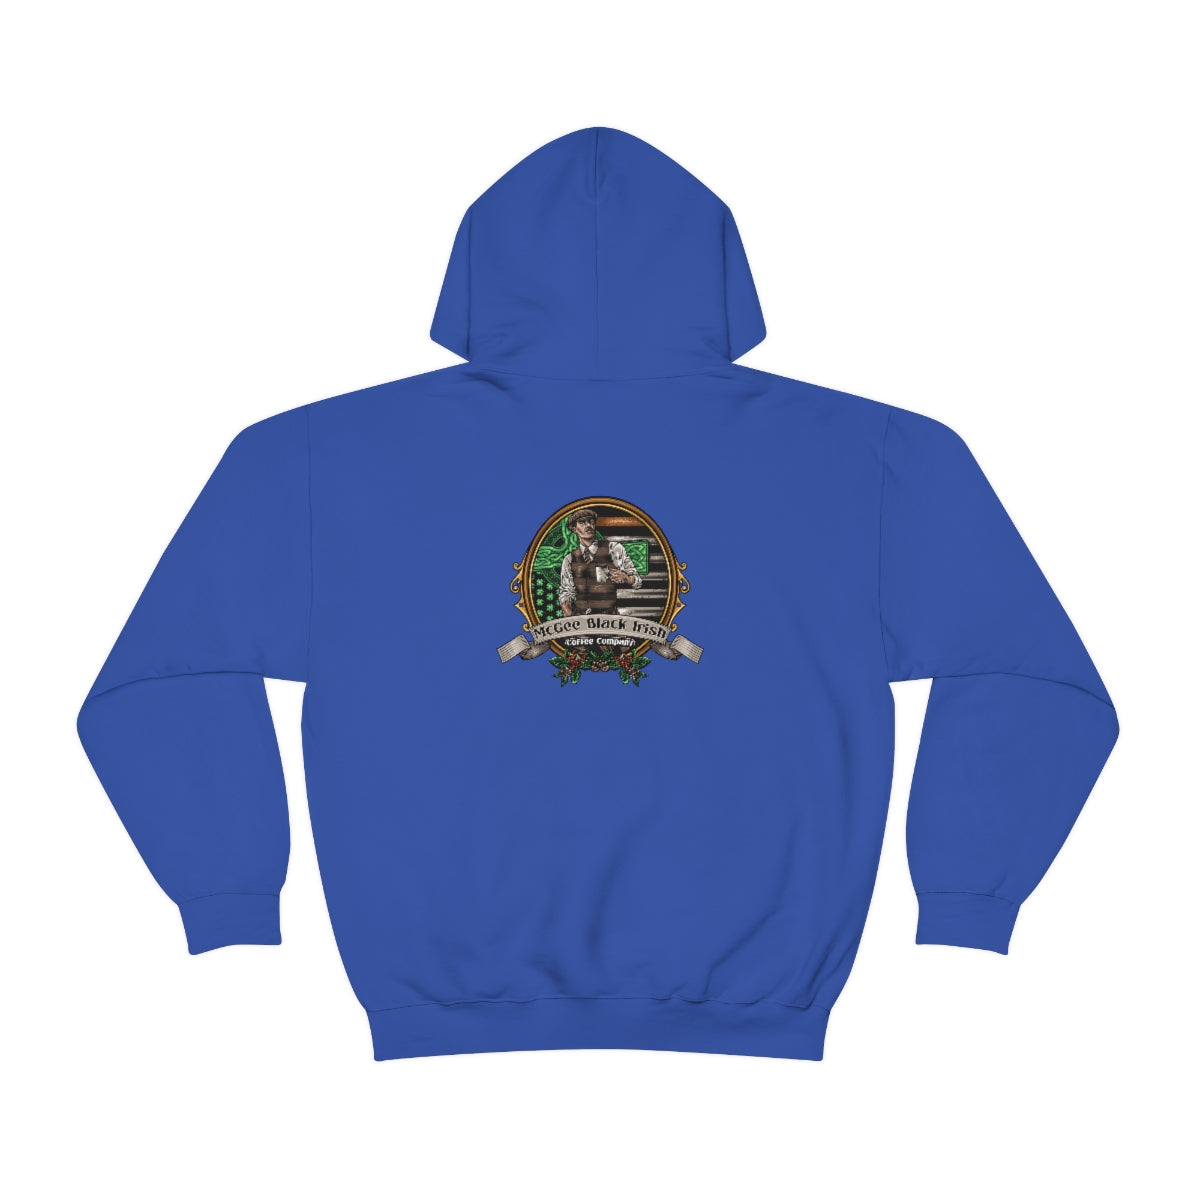 McGee Black Irish Front and Back Print Unisex Heavy Blend™ Hooded Sweatshirt